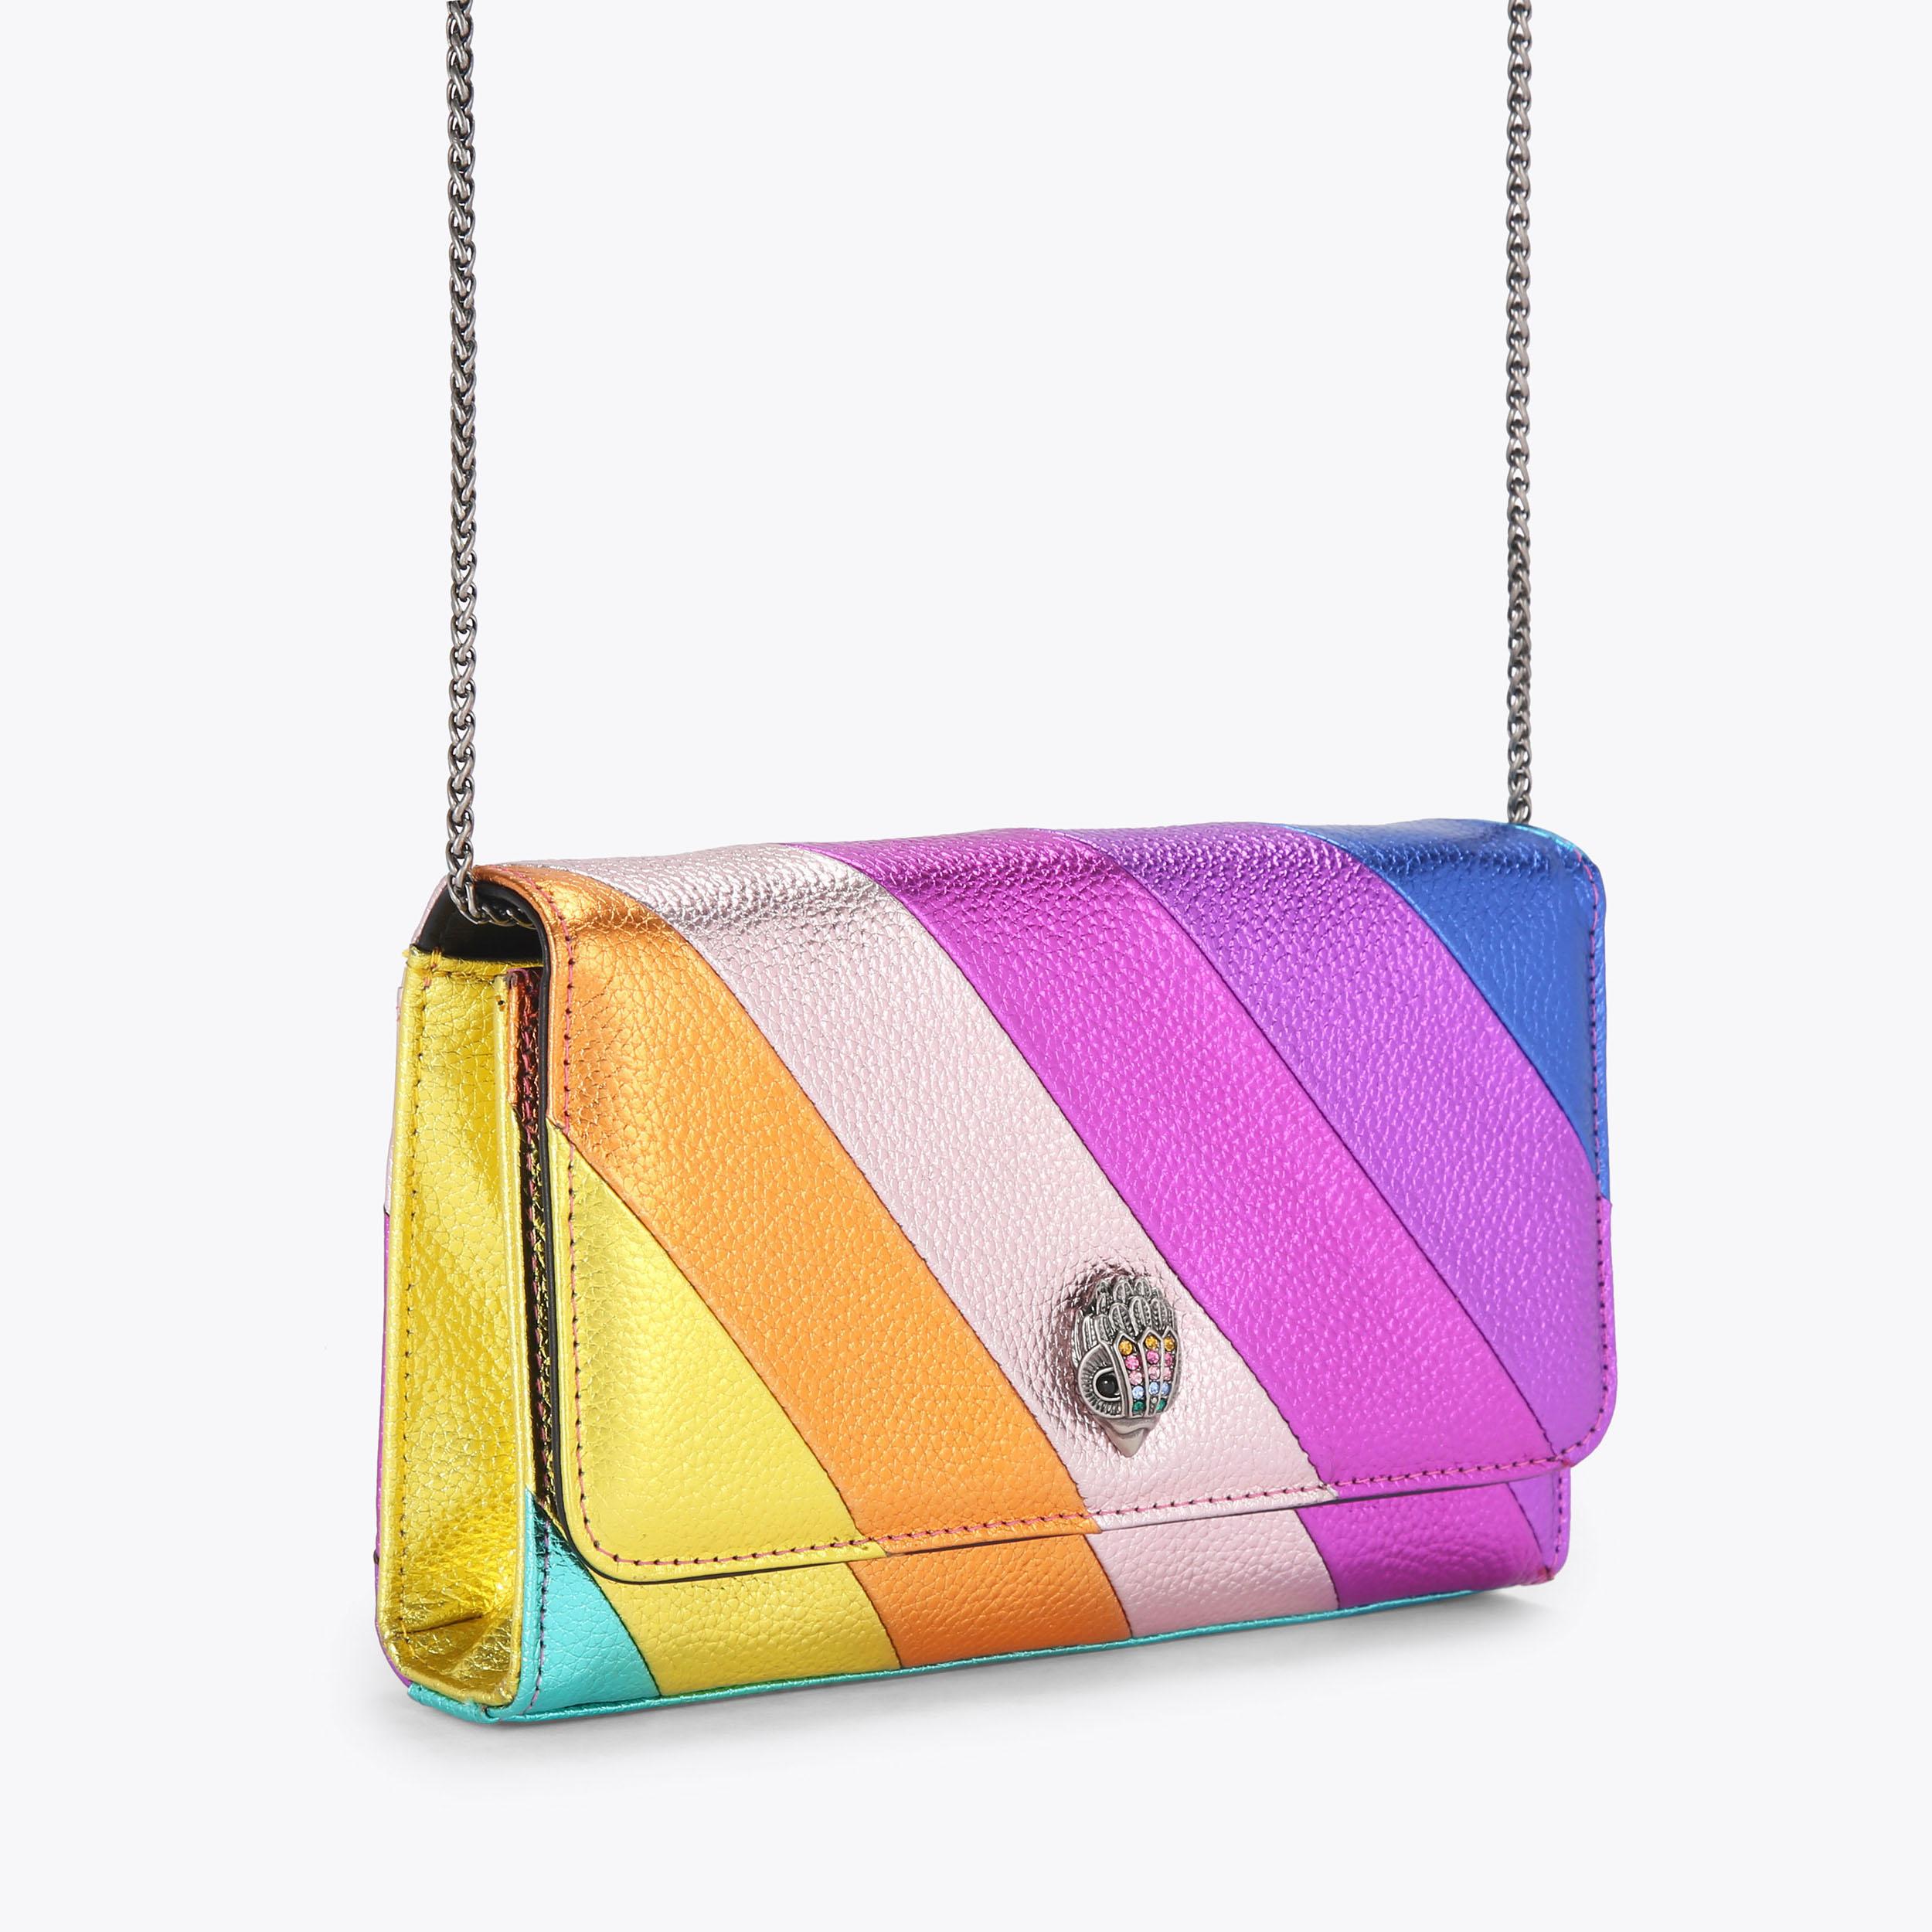 EXTRA MINI KENSINGTON Rainbow Stripe Mini Bag by KURT GEIGER LONDON